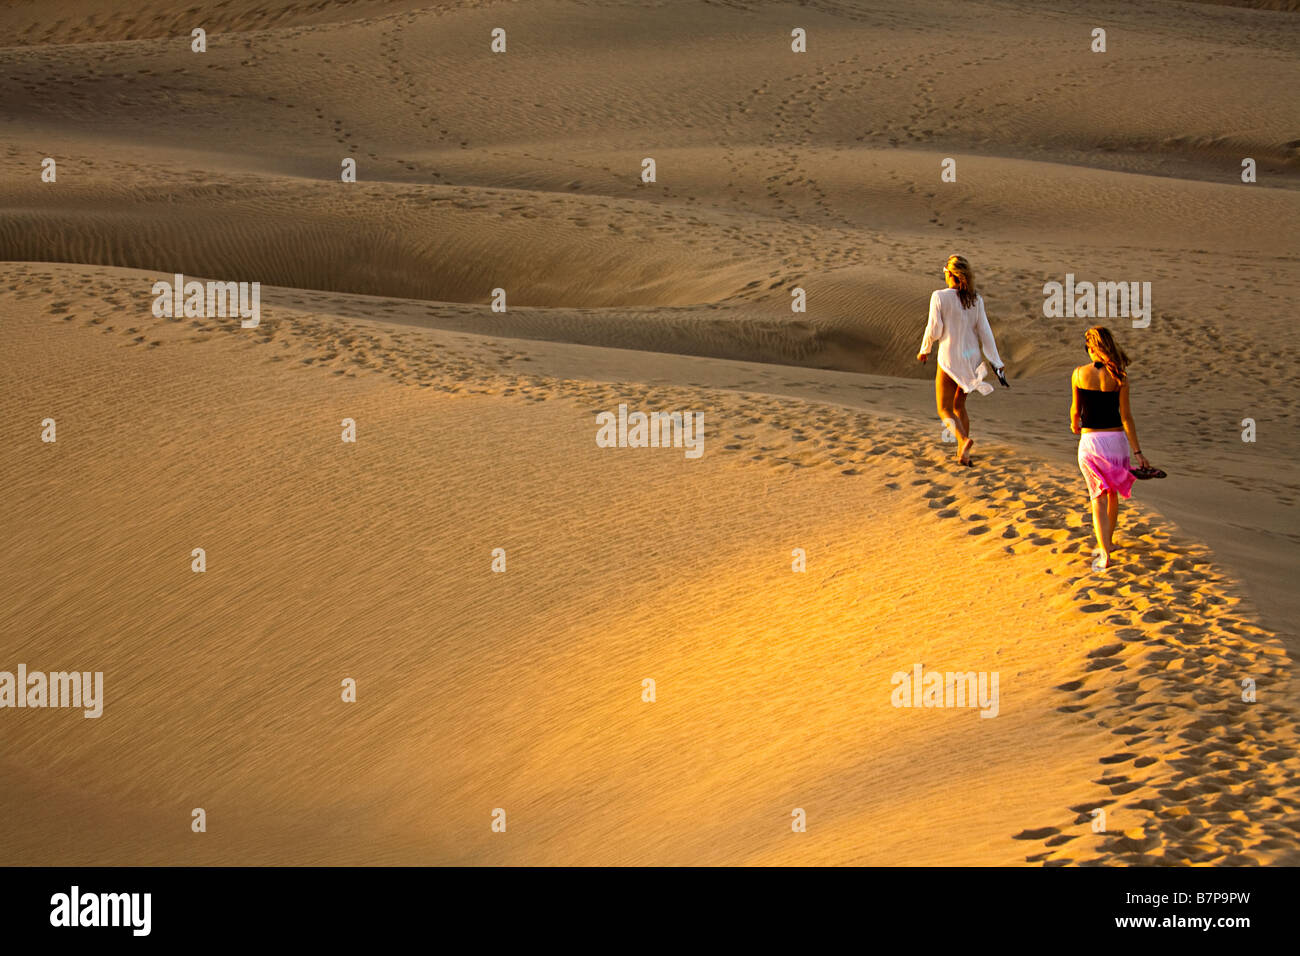 Two women walking barefoot in dunes Maspalomas Gran Canaria Spain Stock Photo